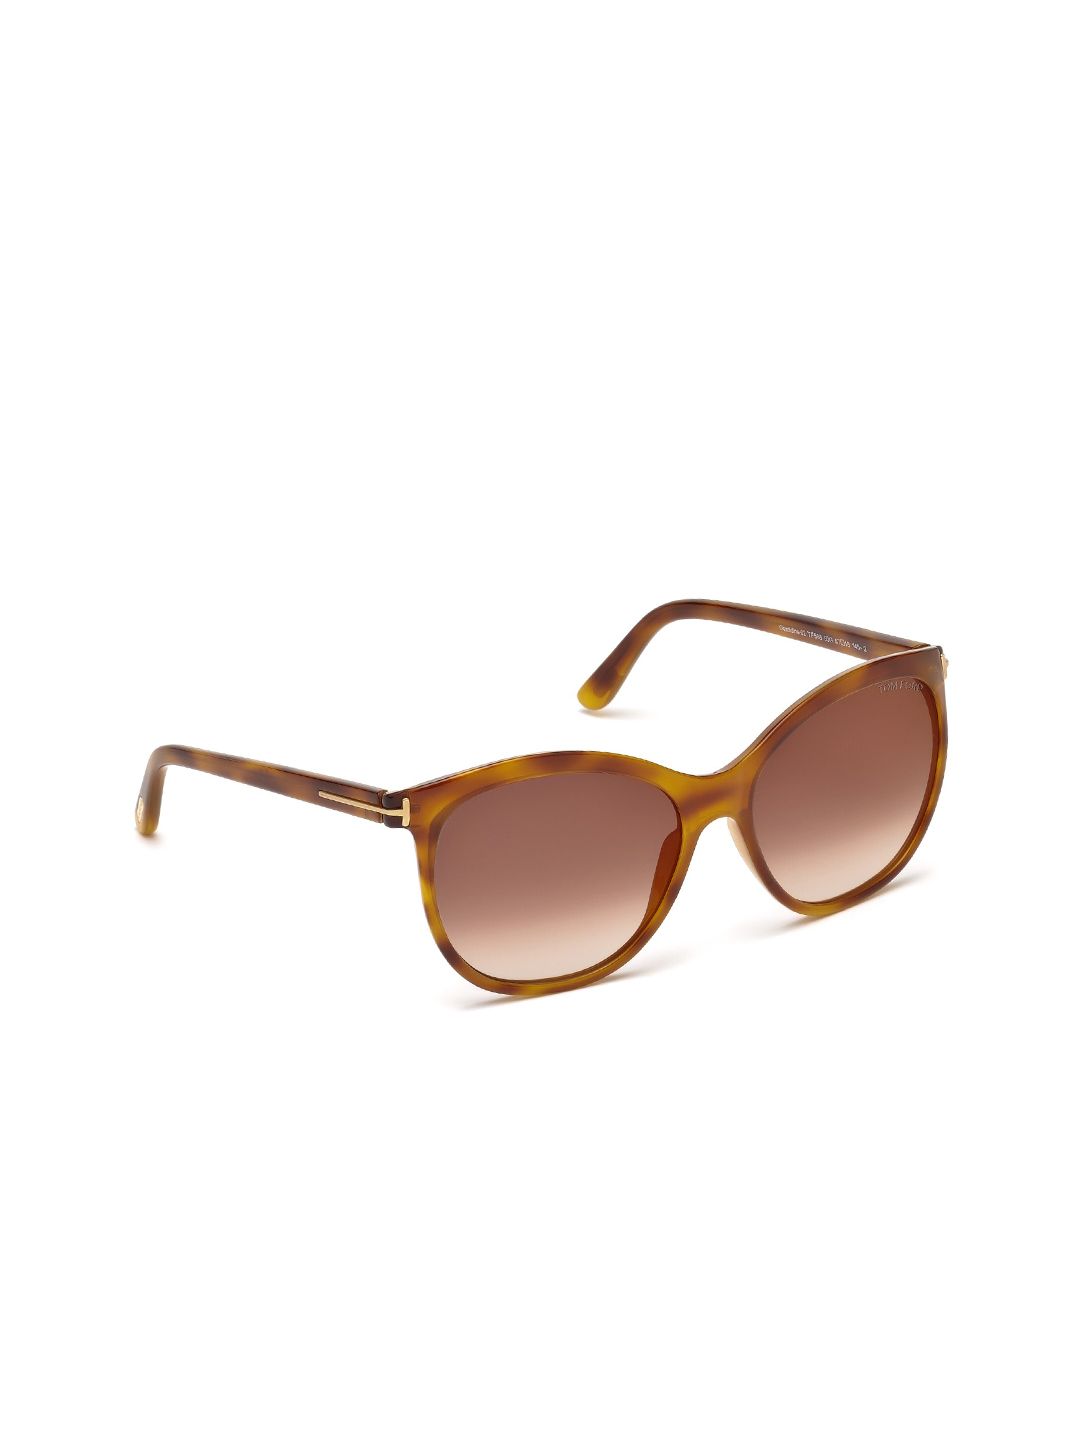 Tom Ford Women Brown Lens & Brown Wayfarer Sunglasses - FT0568 57 53G-Brown Price in India